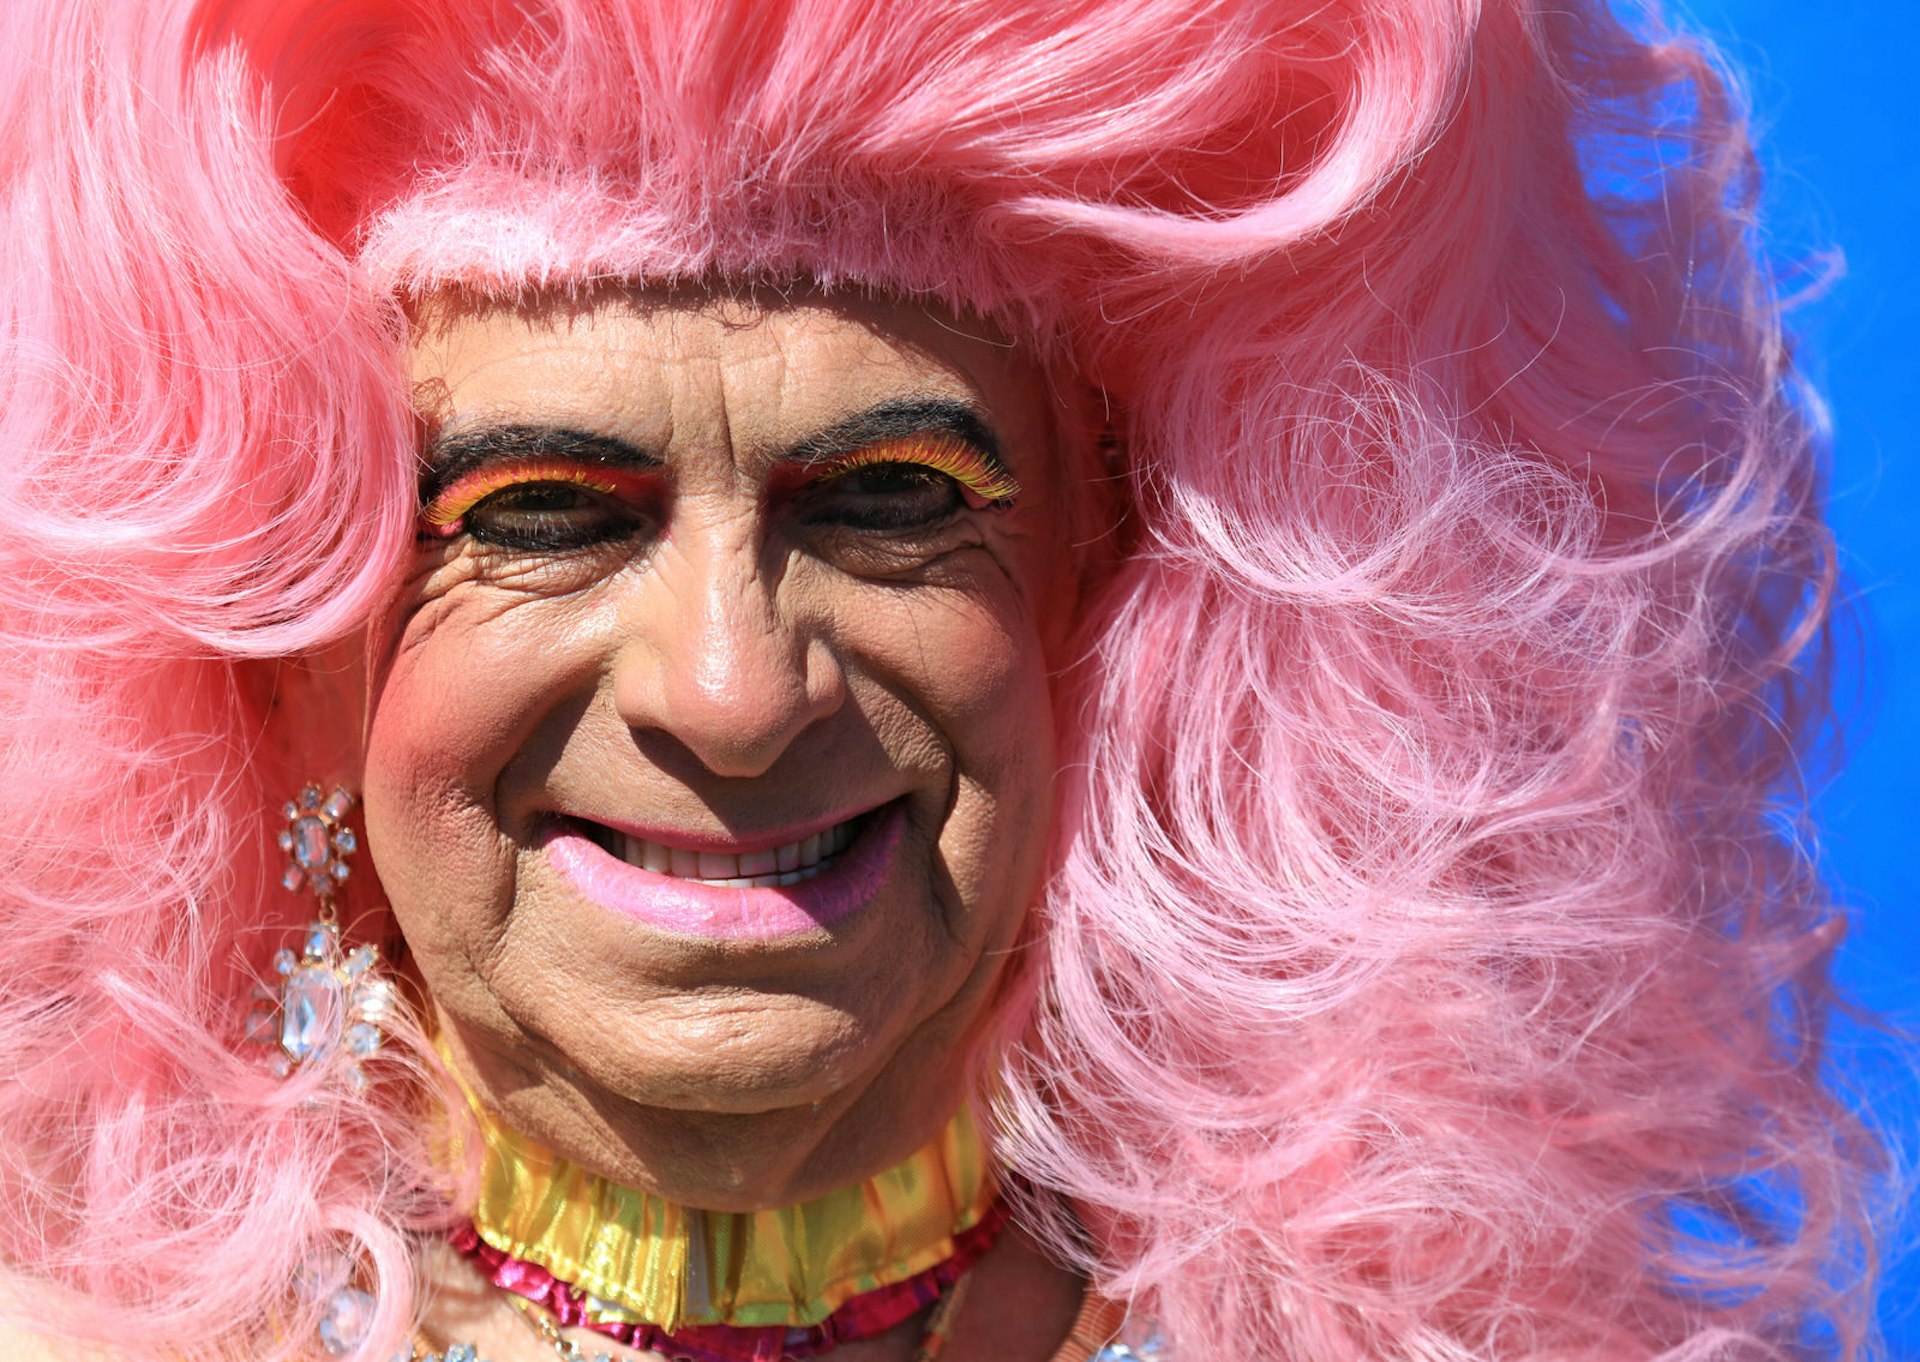 A happy Pridegoer rocks a huge pink wig and bright makeup